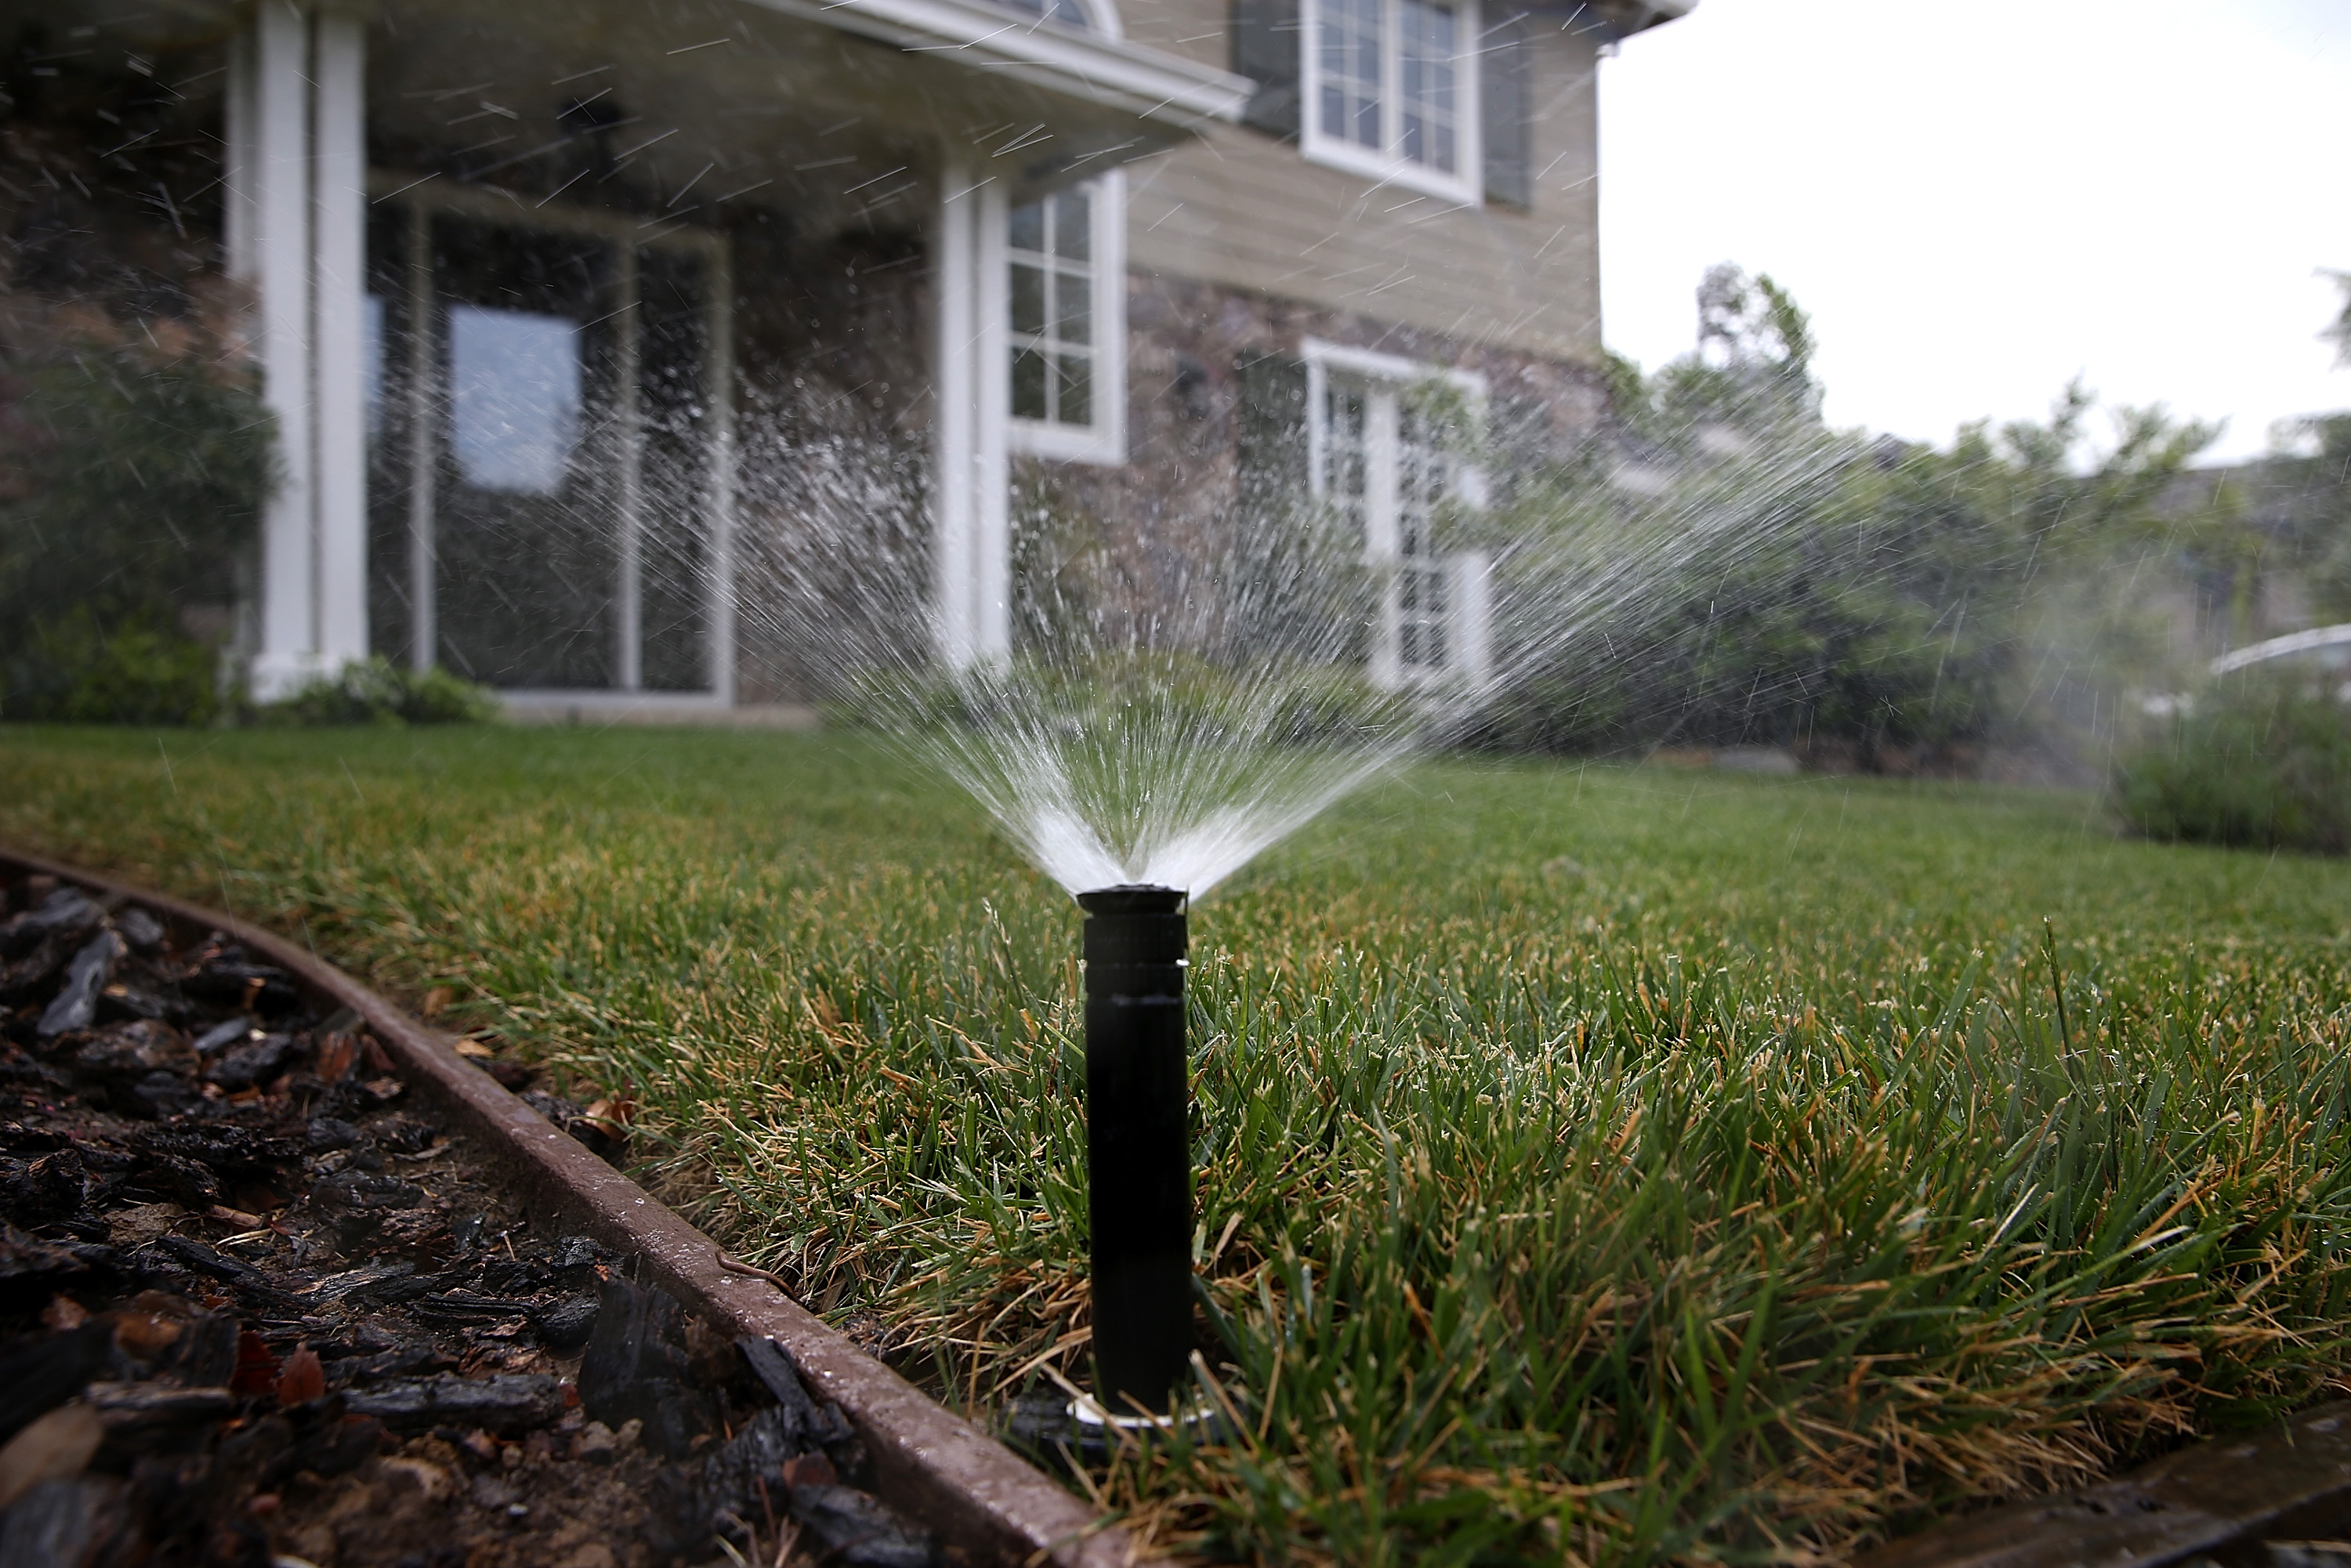 A sprinkler waters a lawn on April 7, 2015 in Walnut Creek, California.